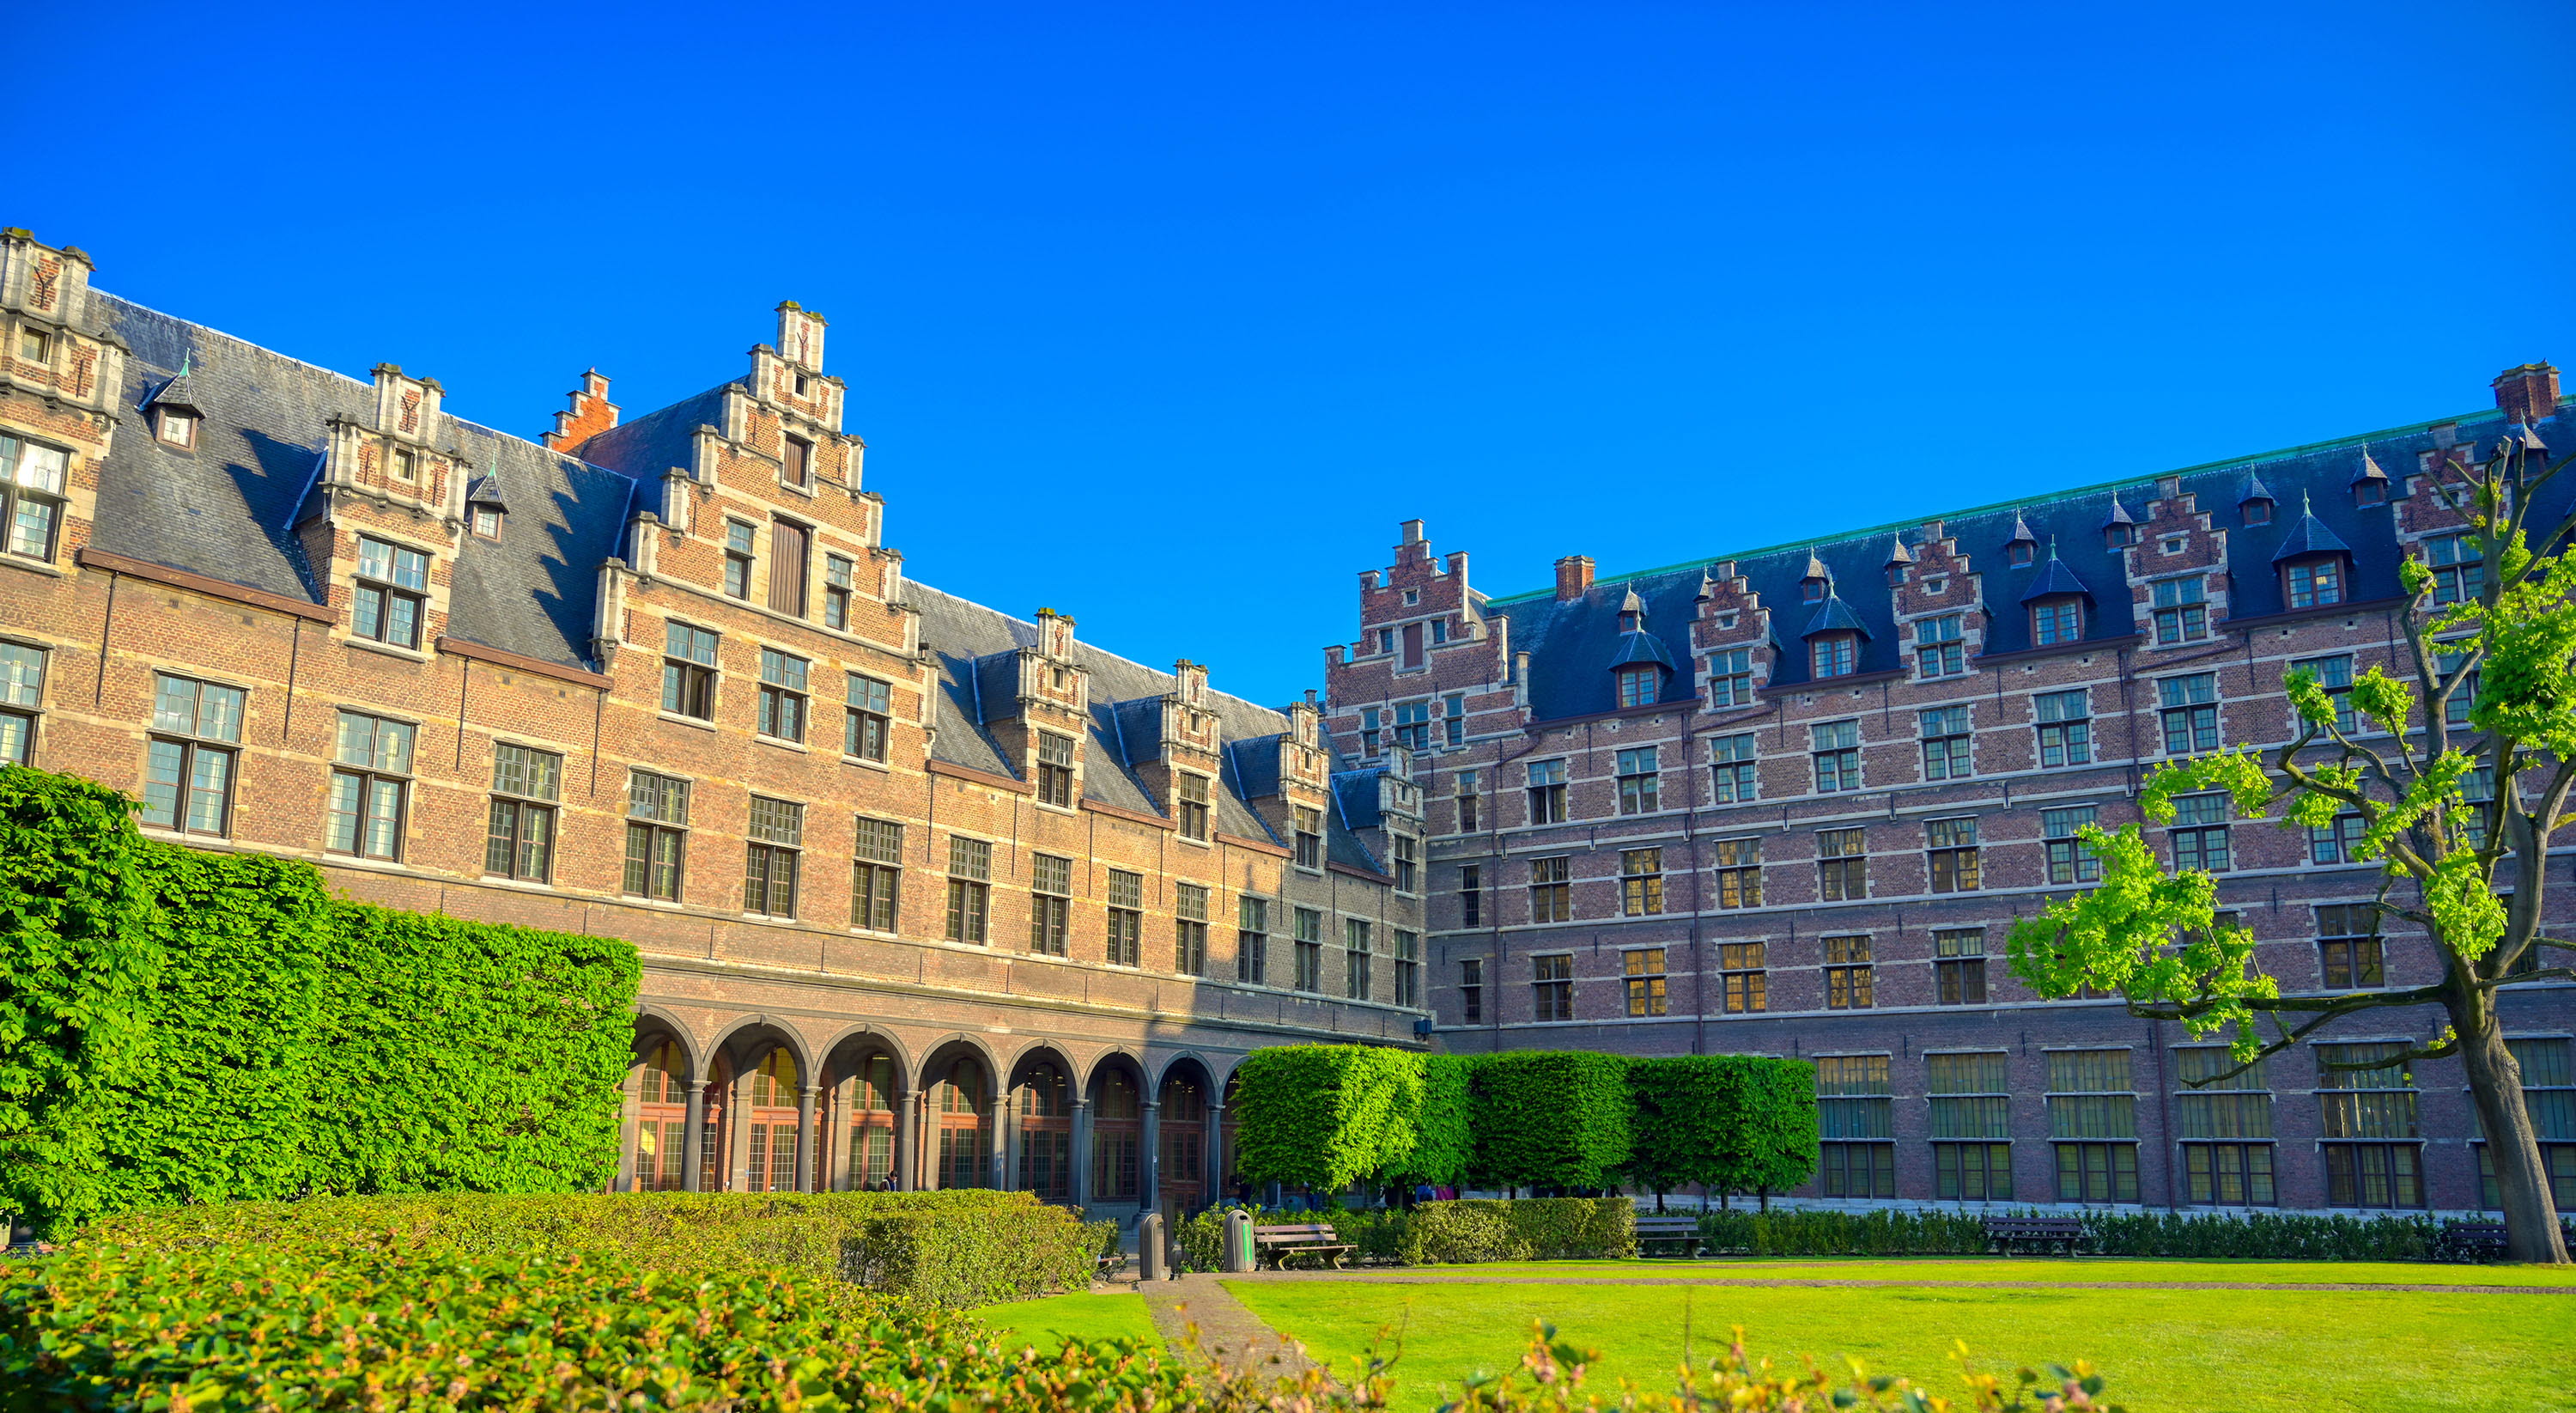 The University of Antwerp